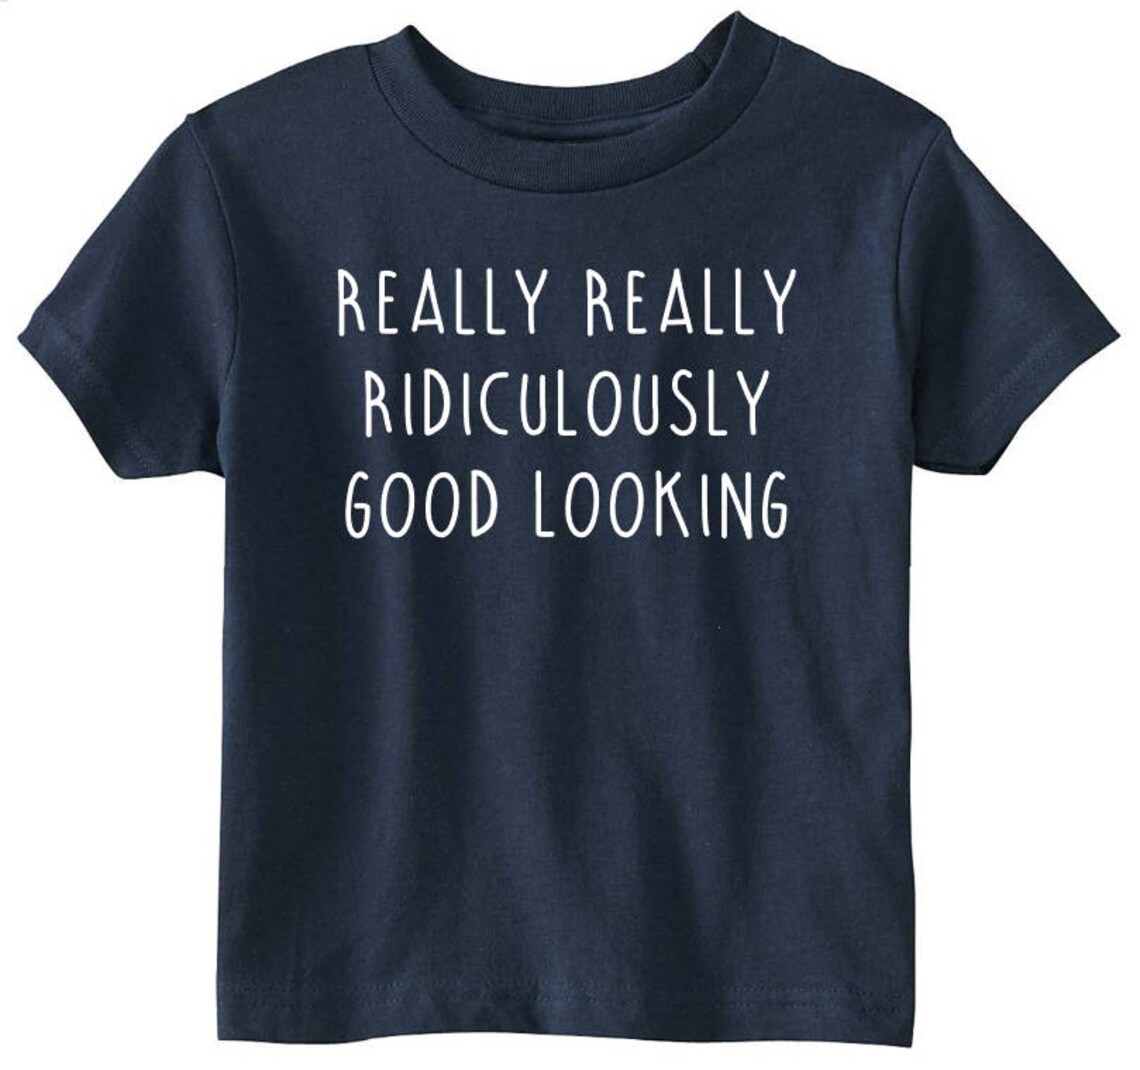 Good Looking Shirt Toddler Shirt Boy Shirt Zoolander Shirt | Etsy